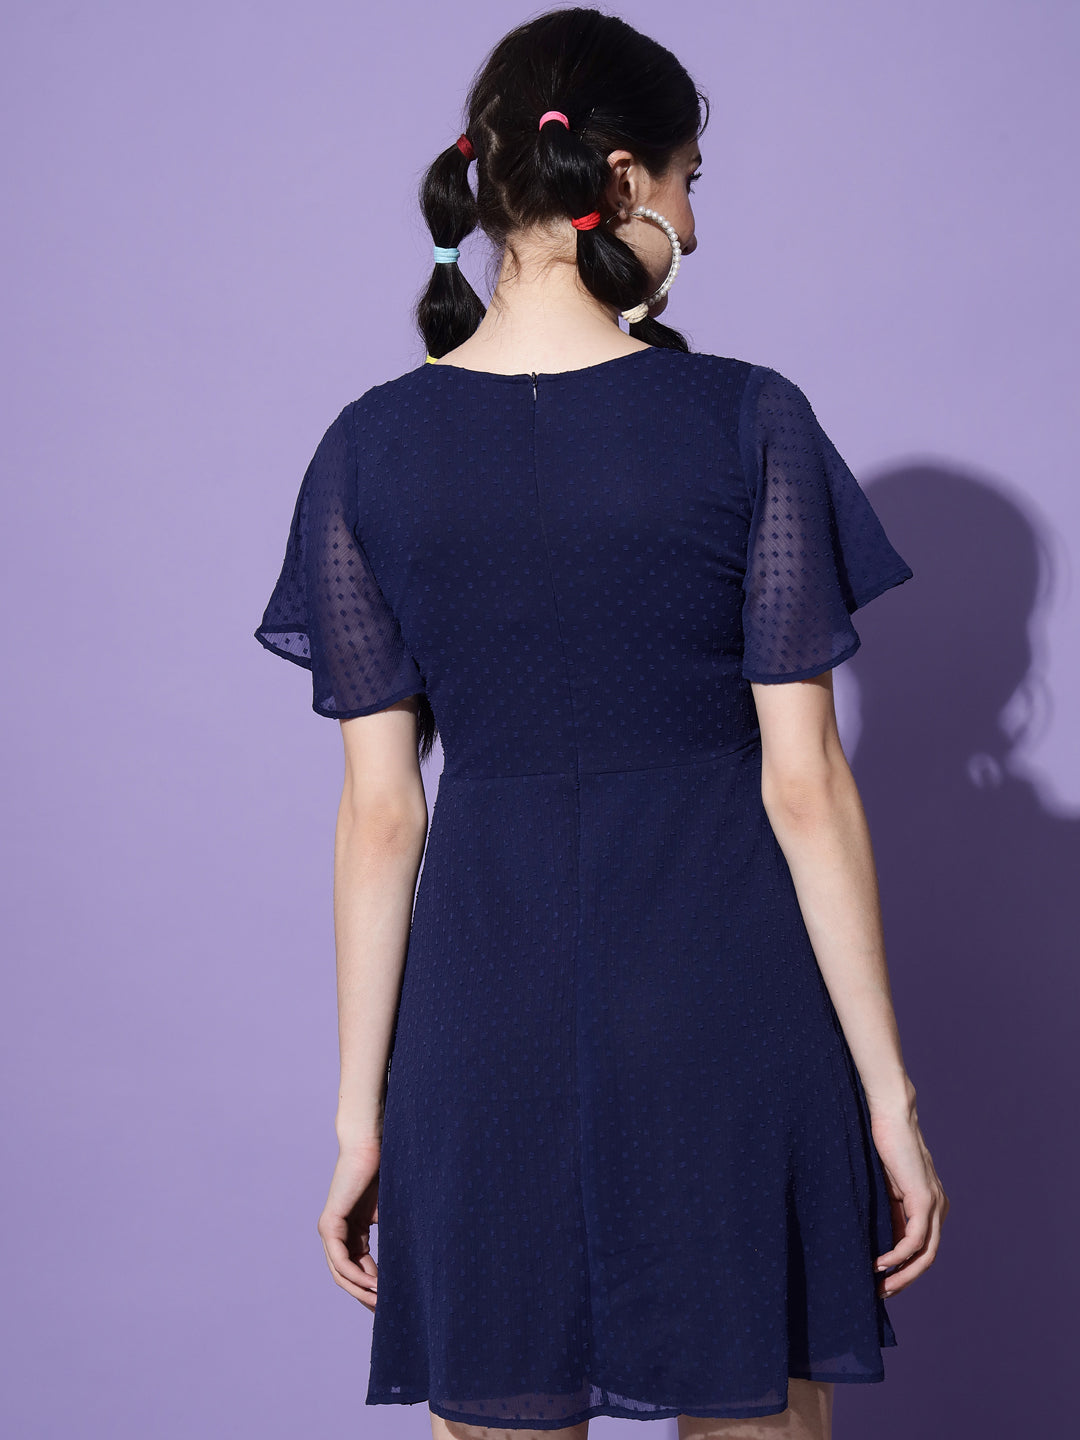 50% OFF on Stylish Short Dress For Women on Snapdeal | PaisaWapas.com